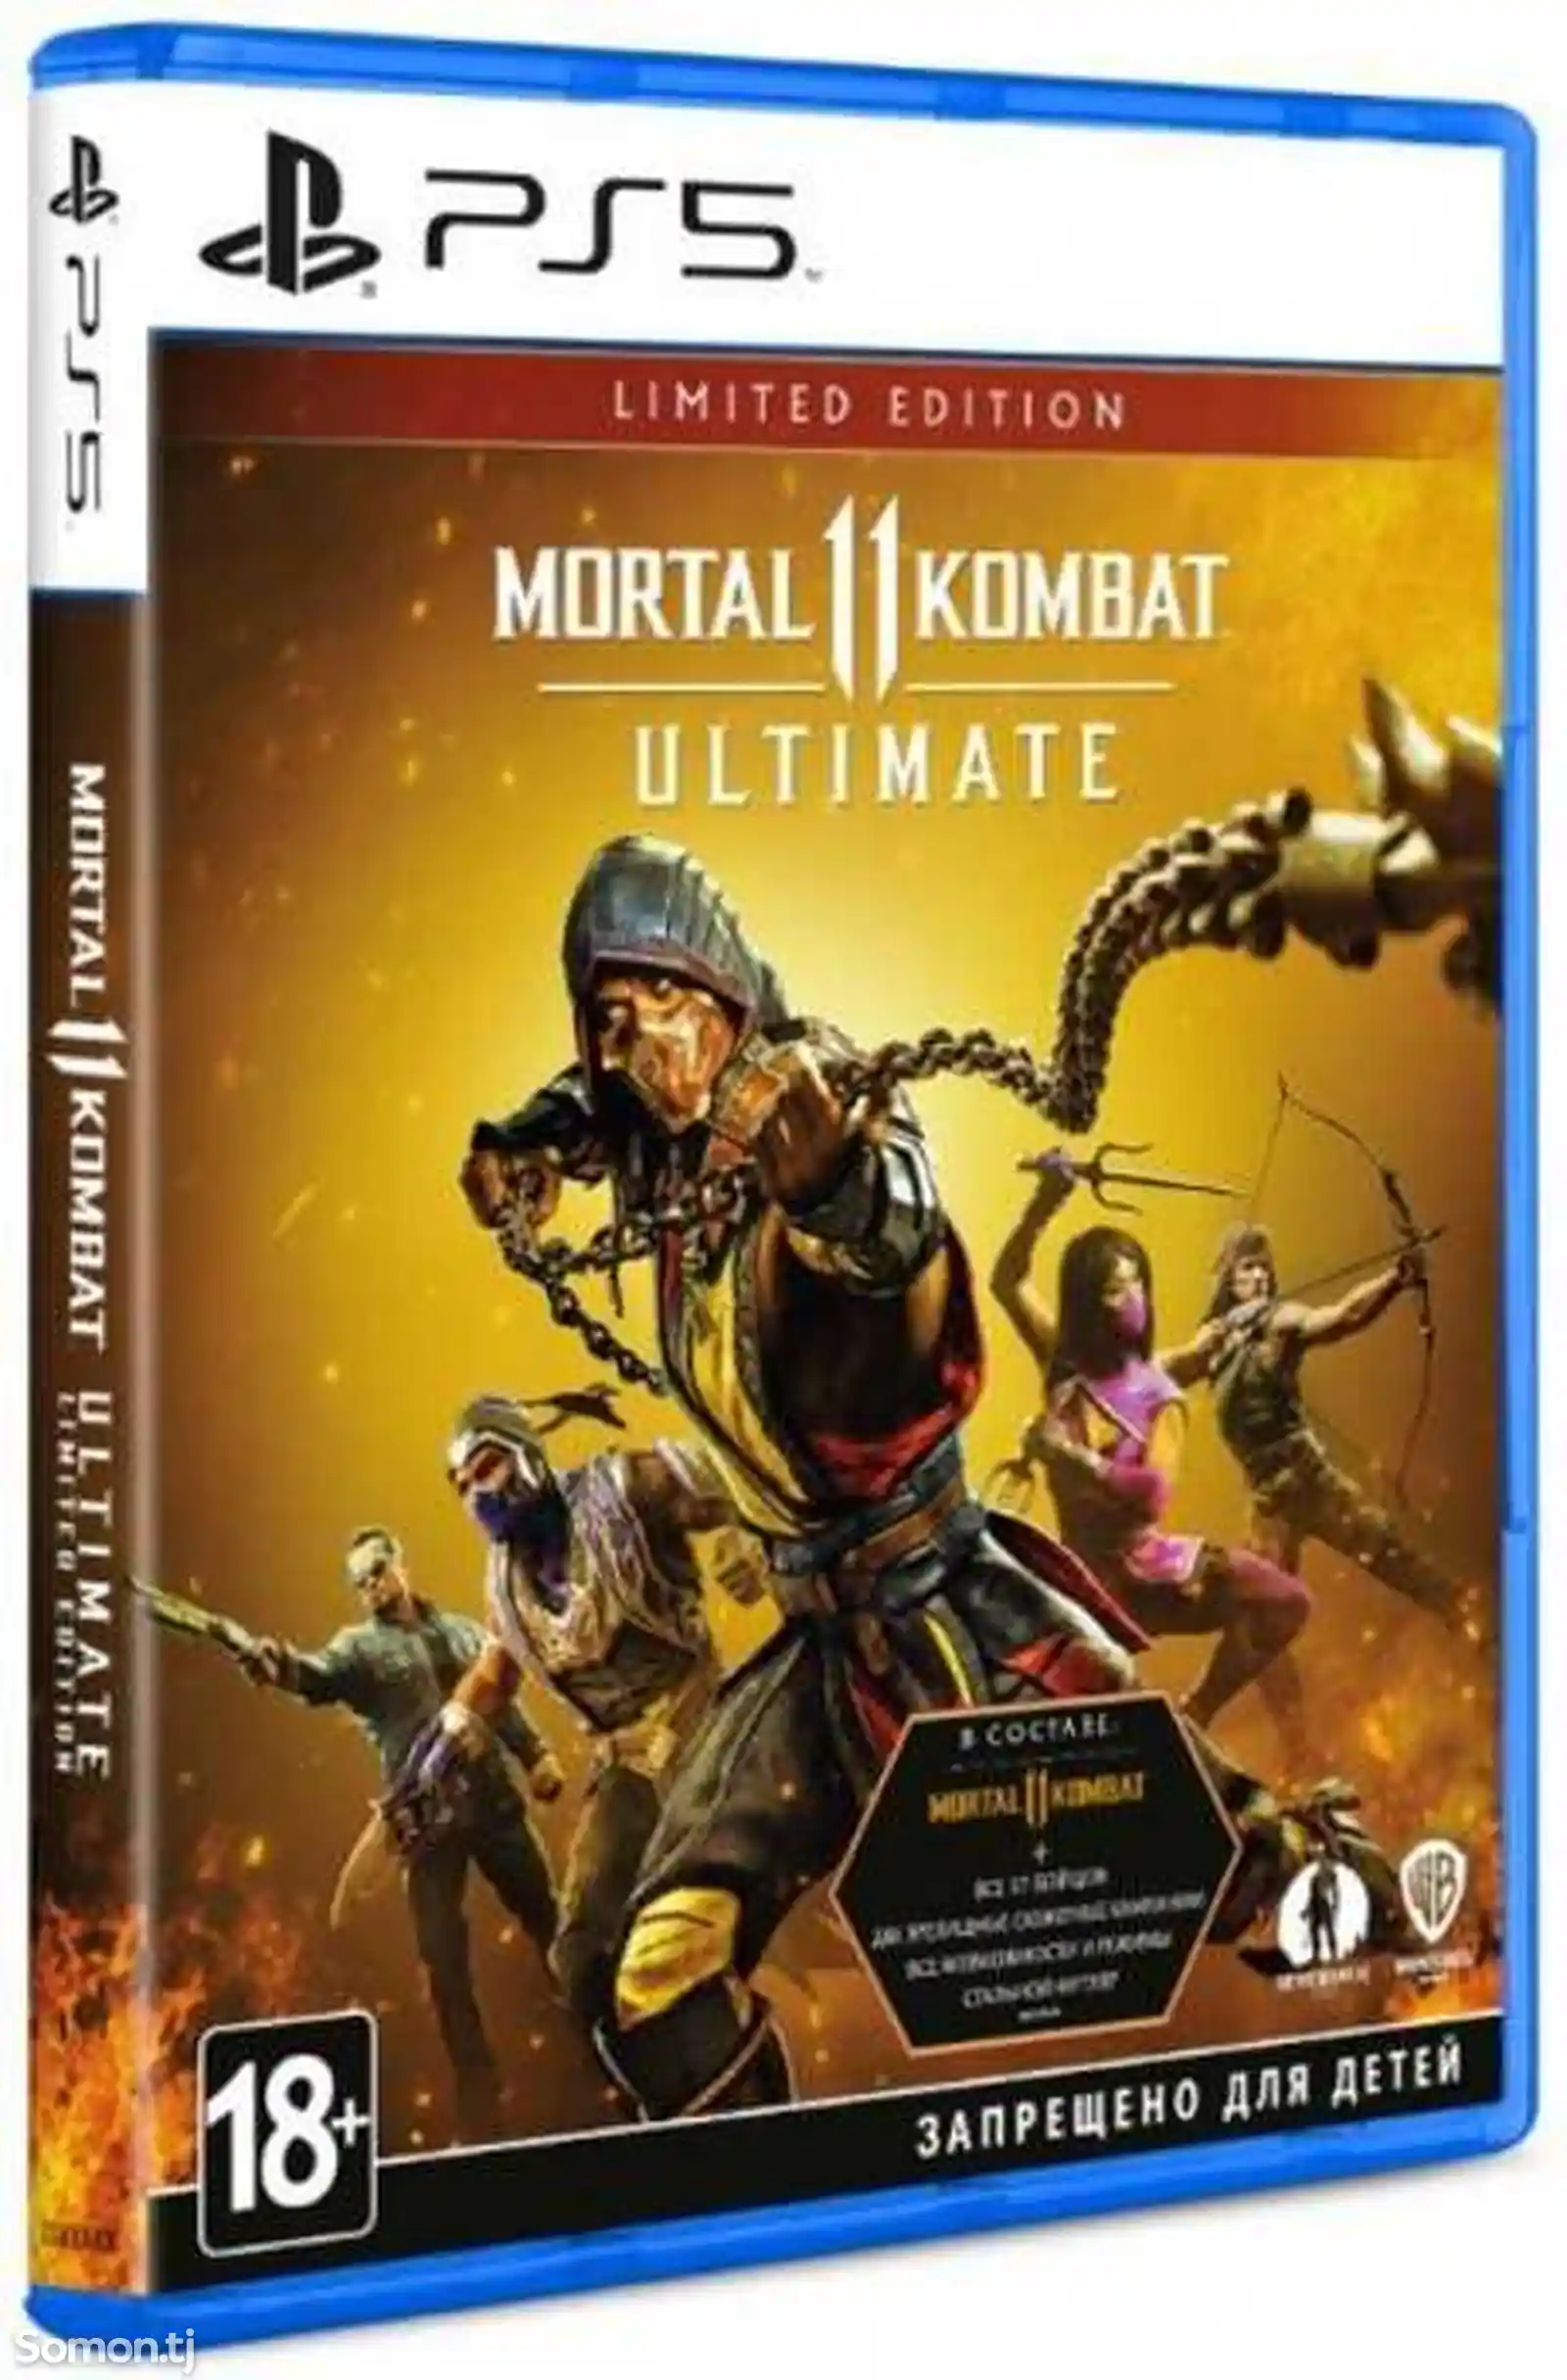 Игра Mortal Kombat 11 Ultimate Limited Edition для Ps5-1